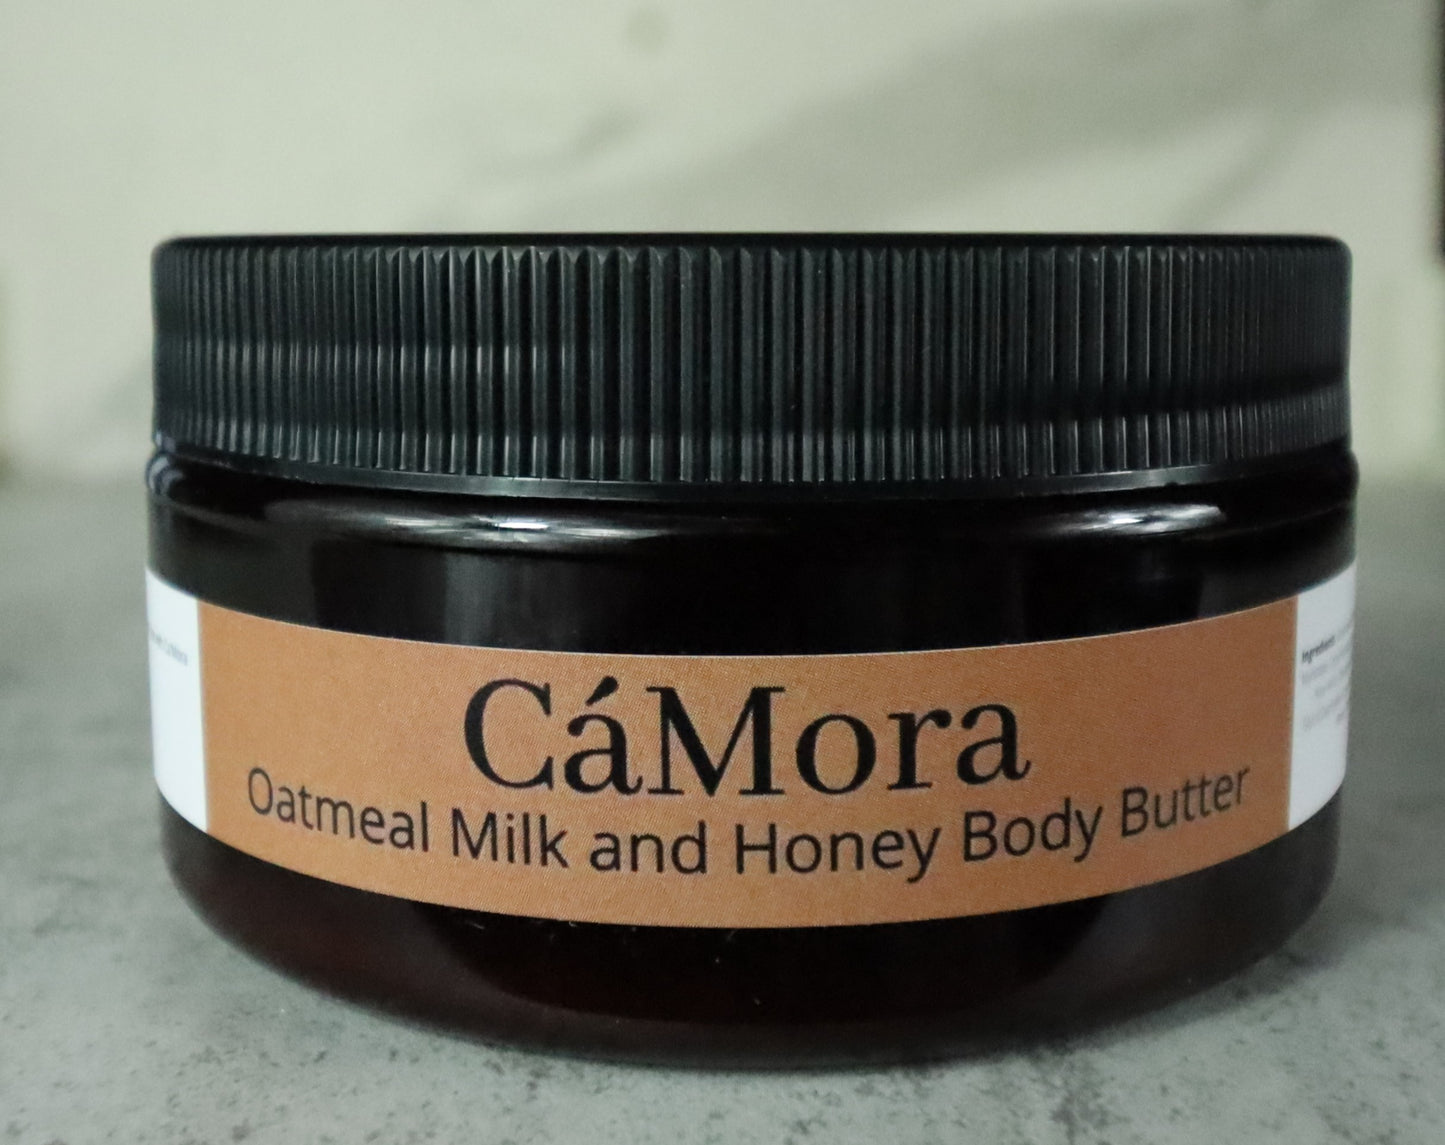 Ca'Mora oatmeal milk and honey body butter for soft skin.